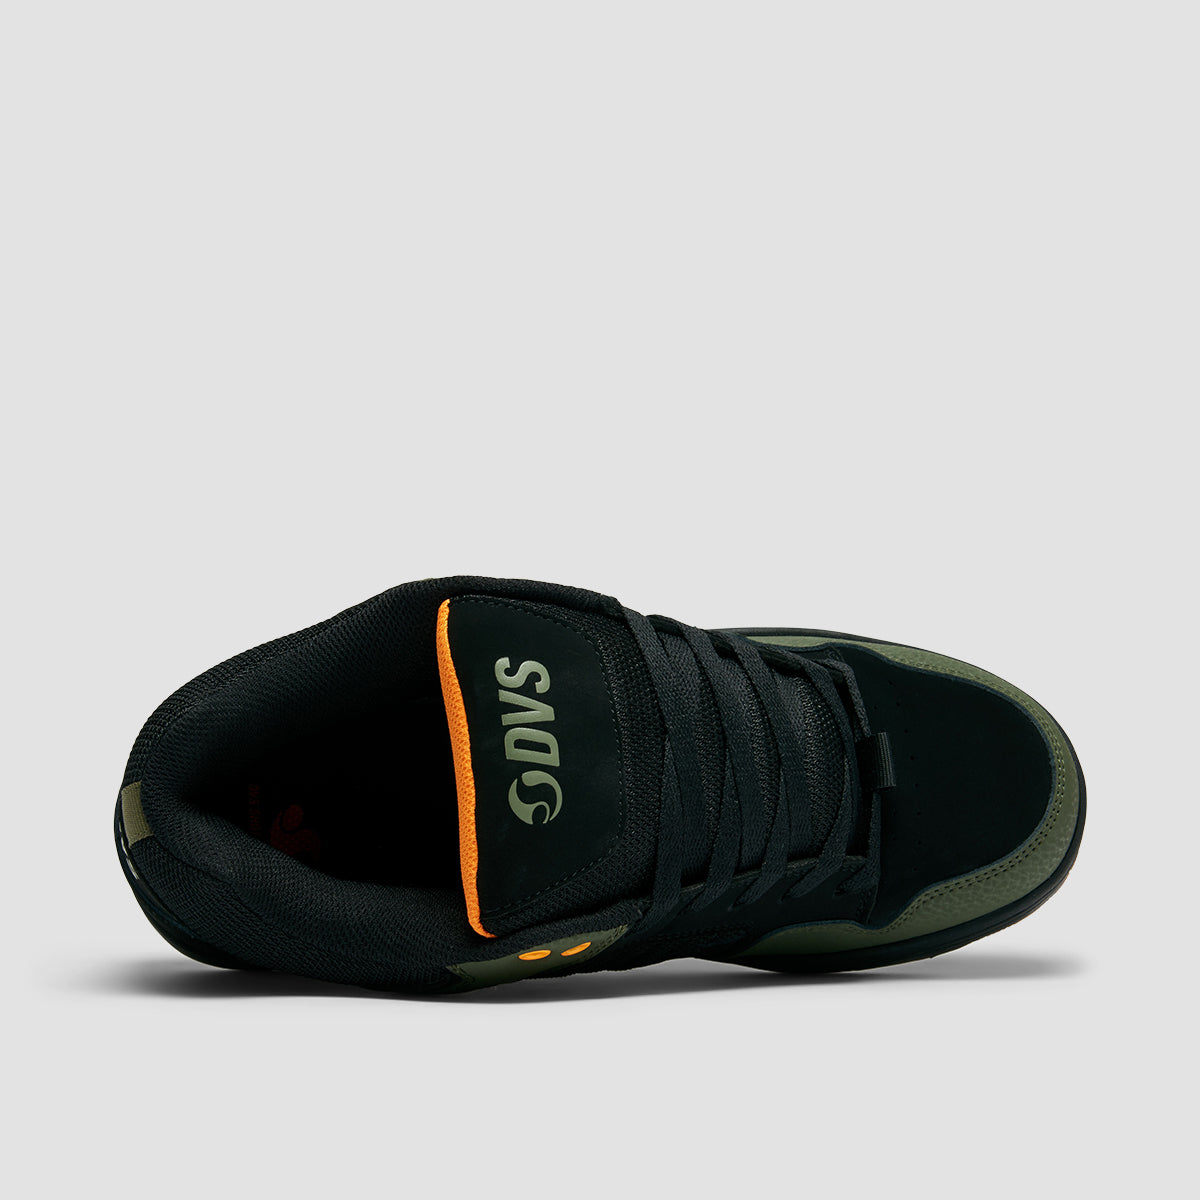 DVS Enduro 125 Shoes - Black/Olive Leather